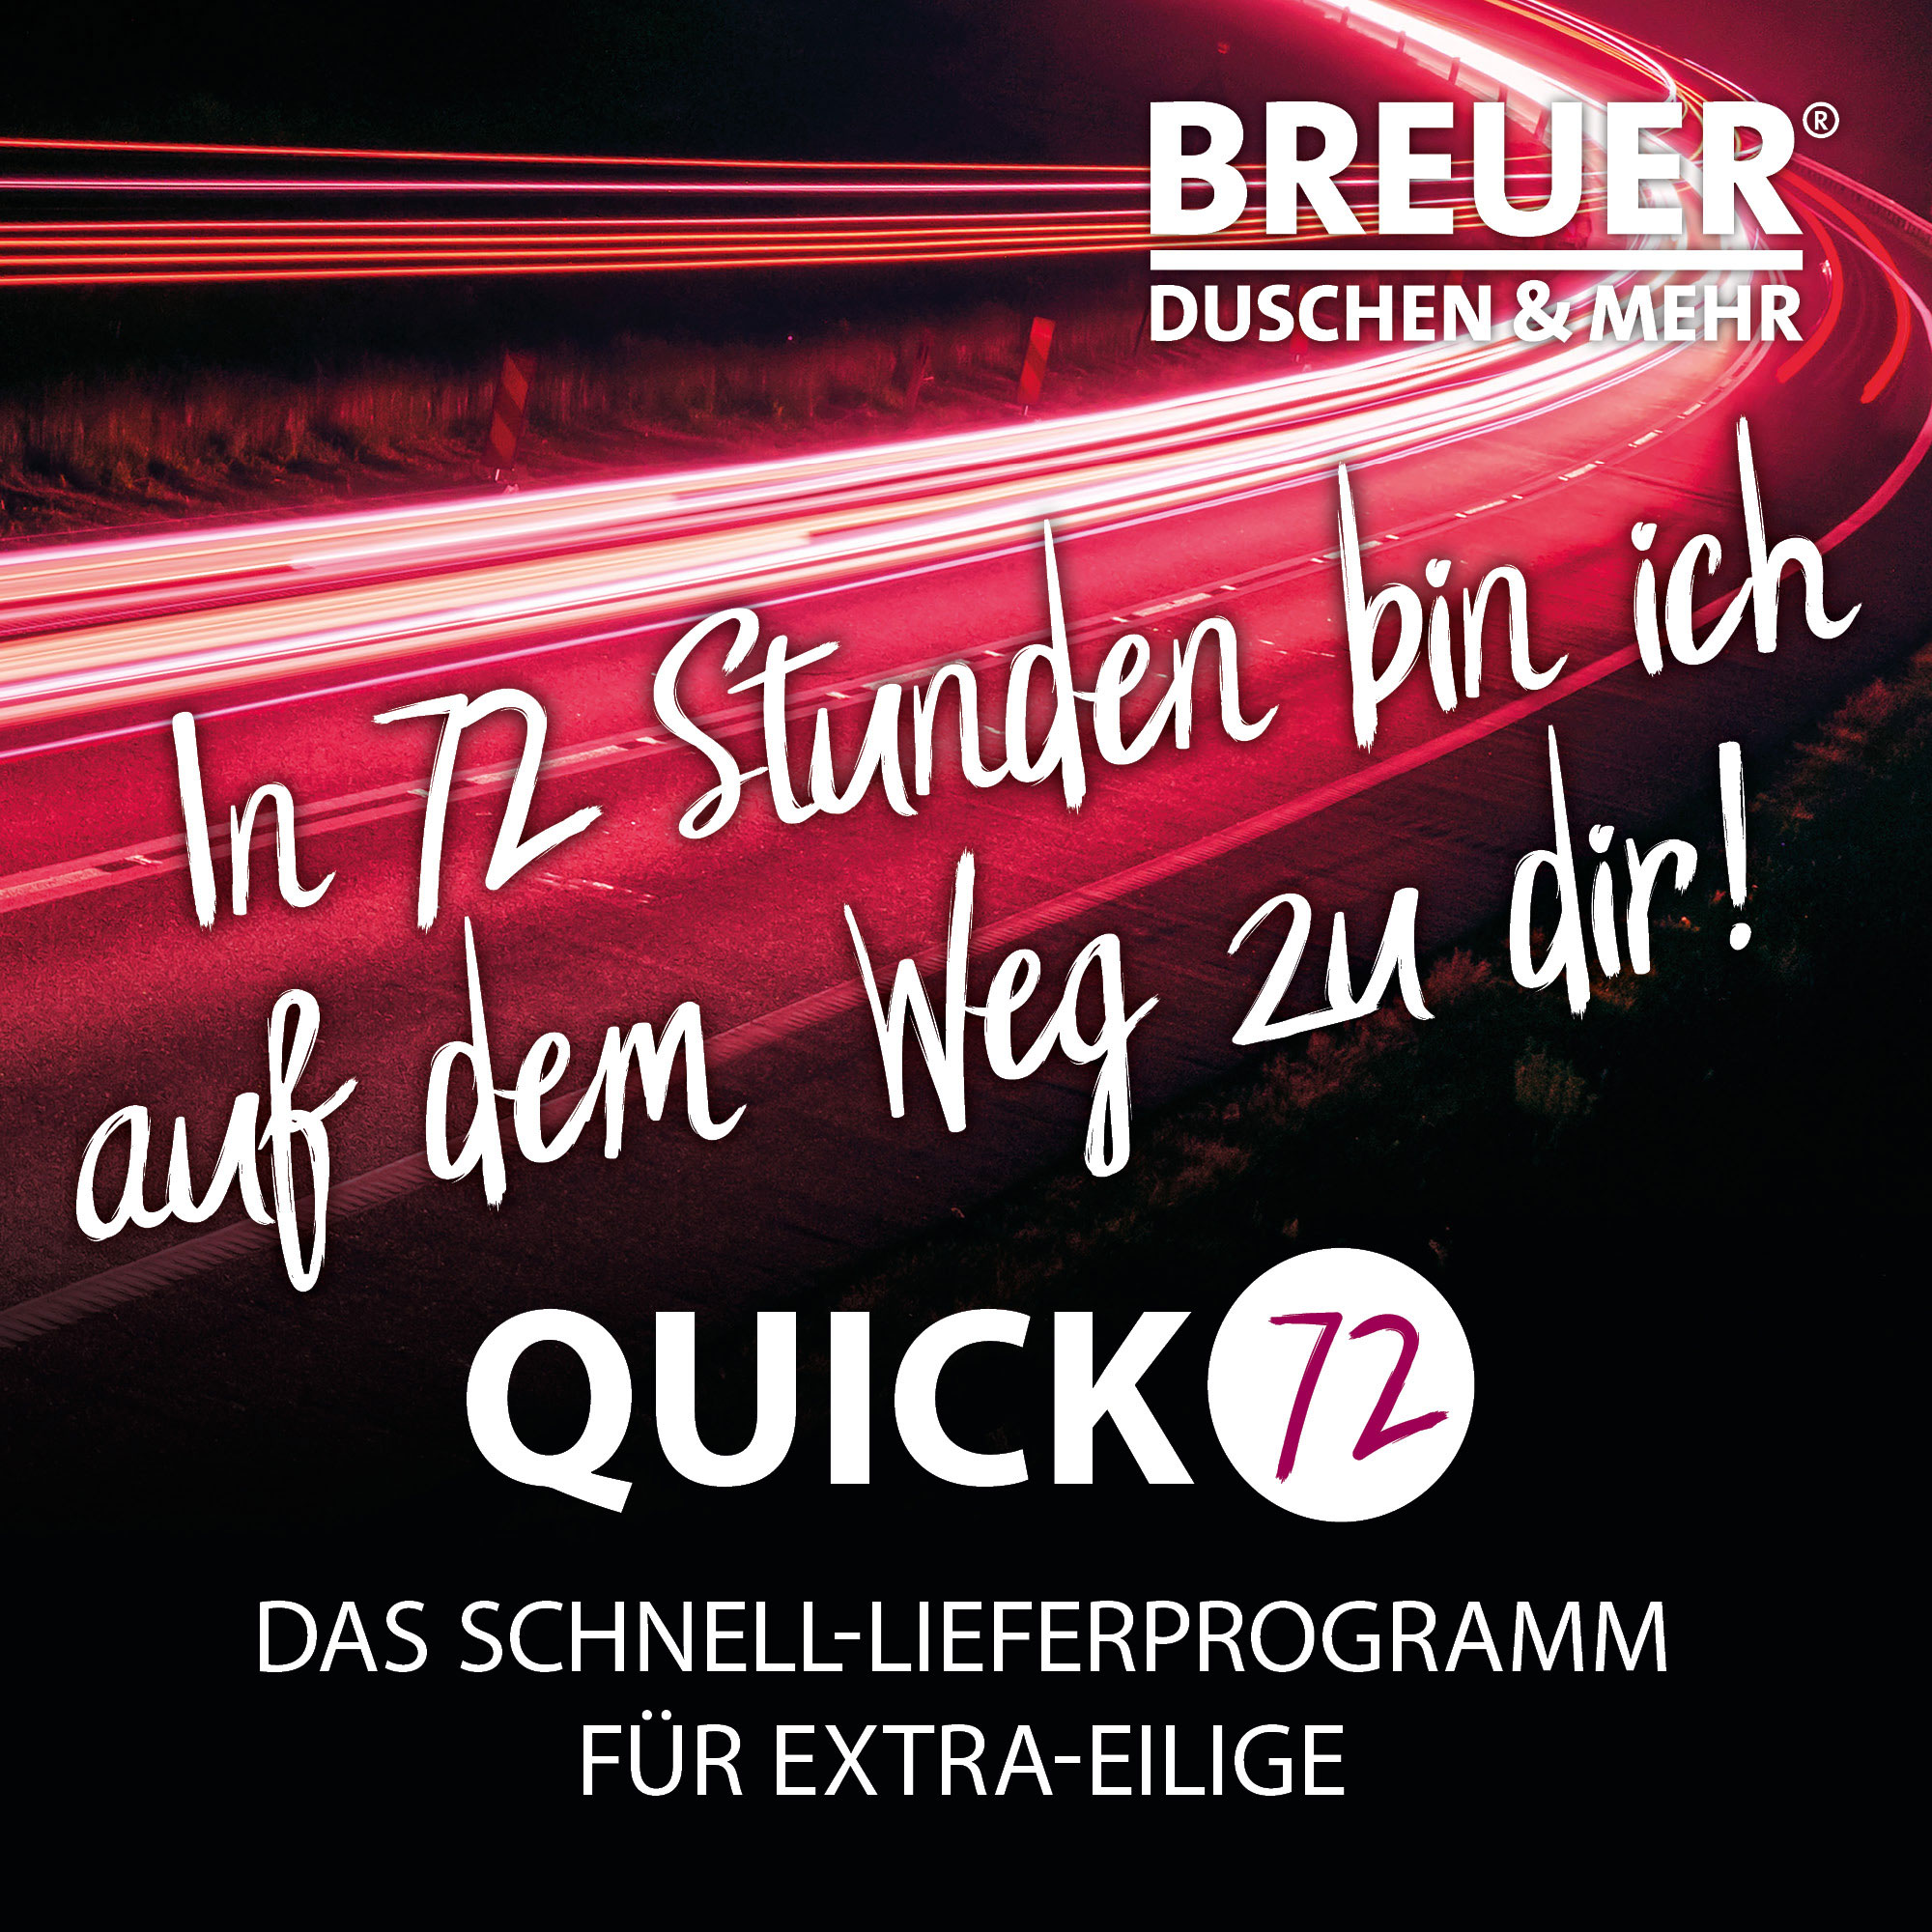 Duschrückwand 'Quick72' silbergrau 90 x 210 cm + product picture